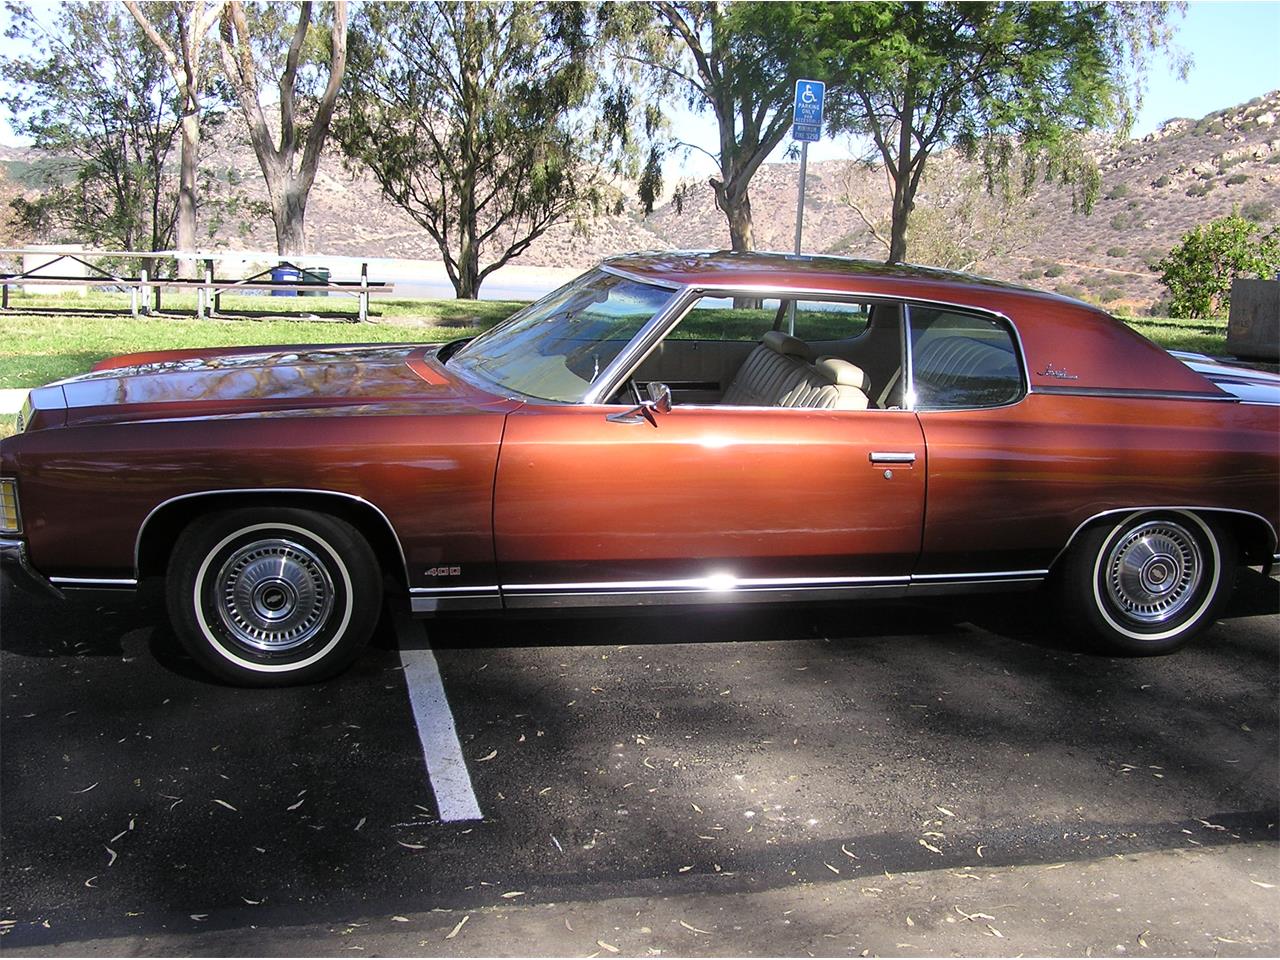 1971 Chevrolet Impala for sale in Poway, CA